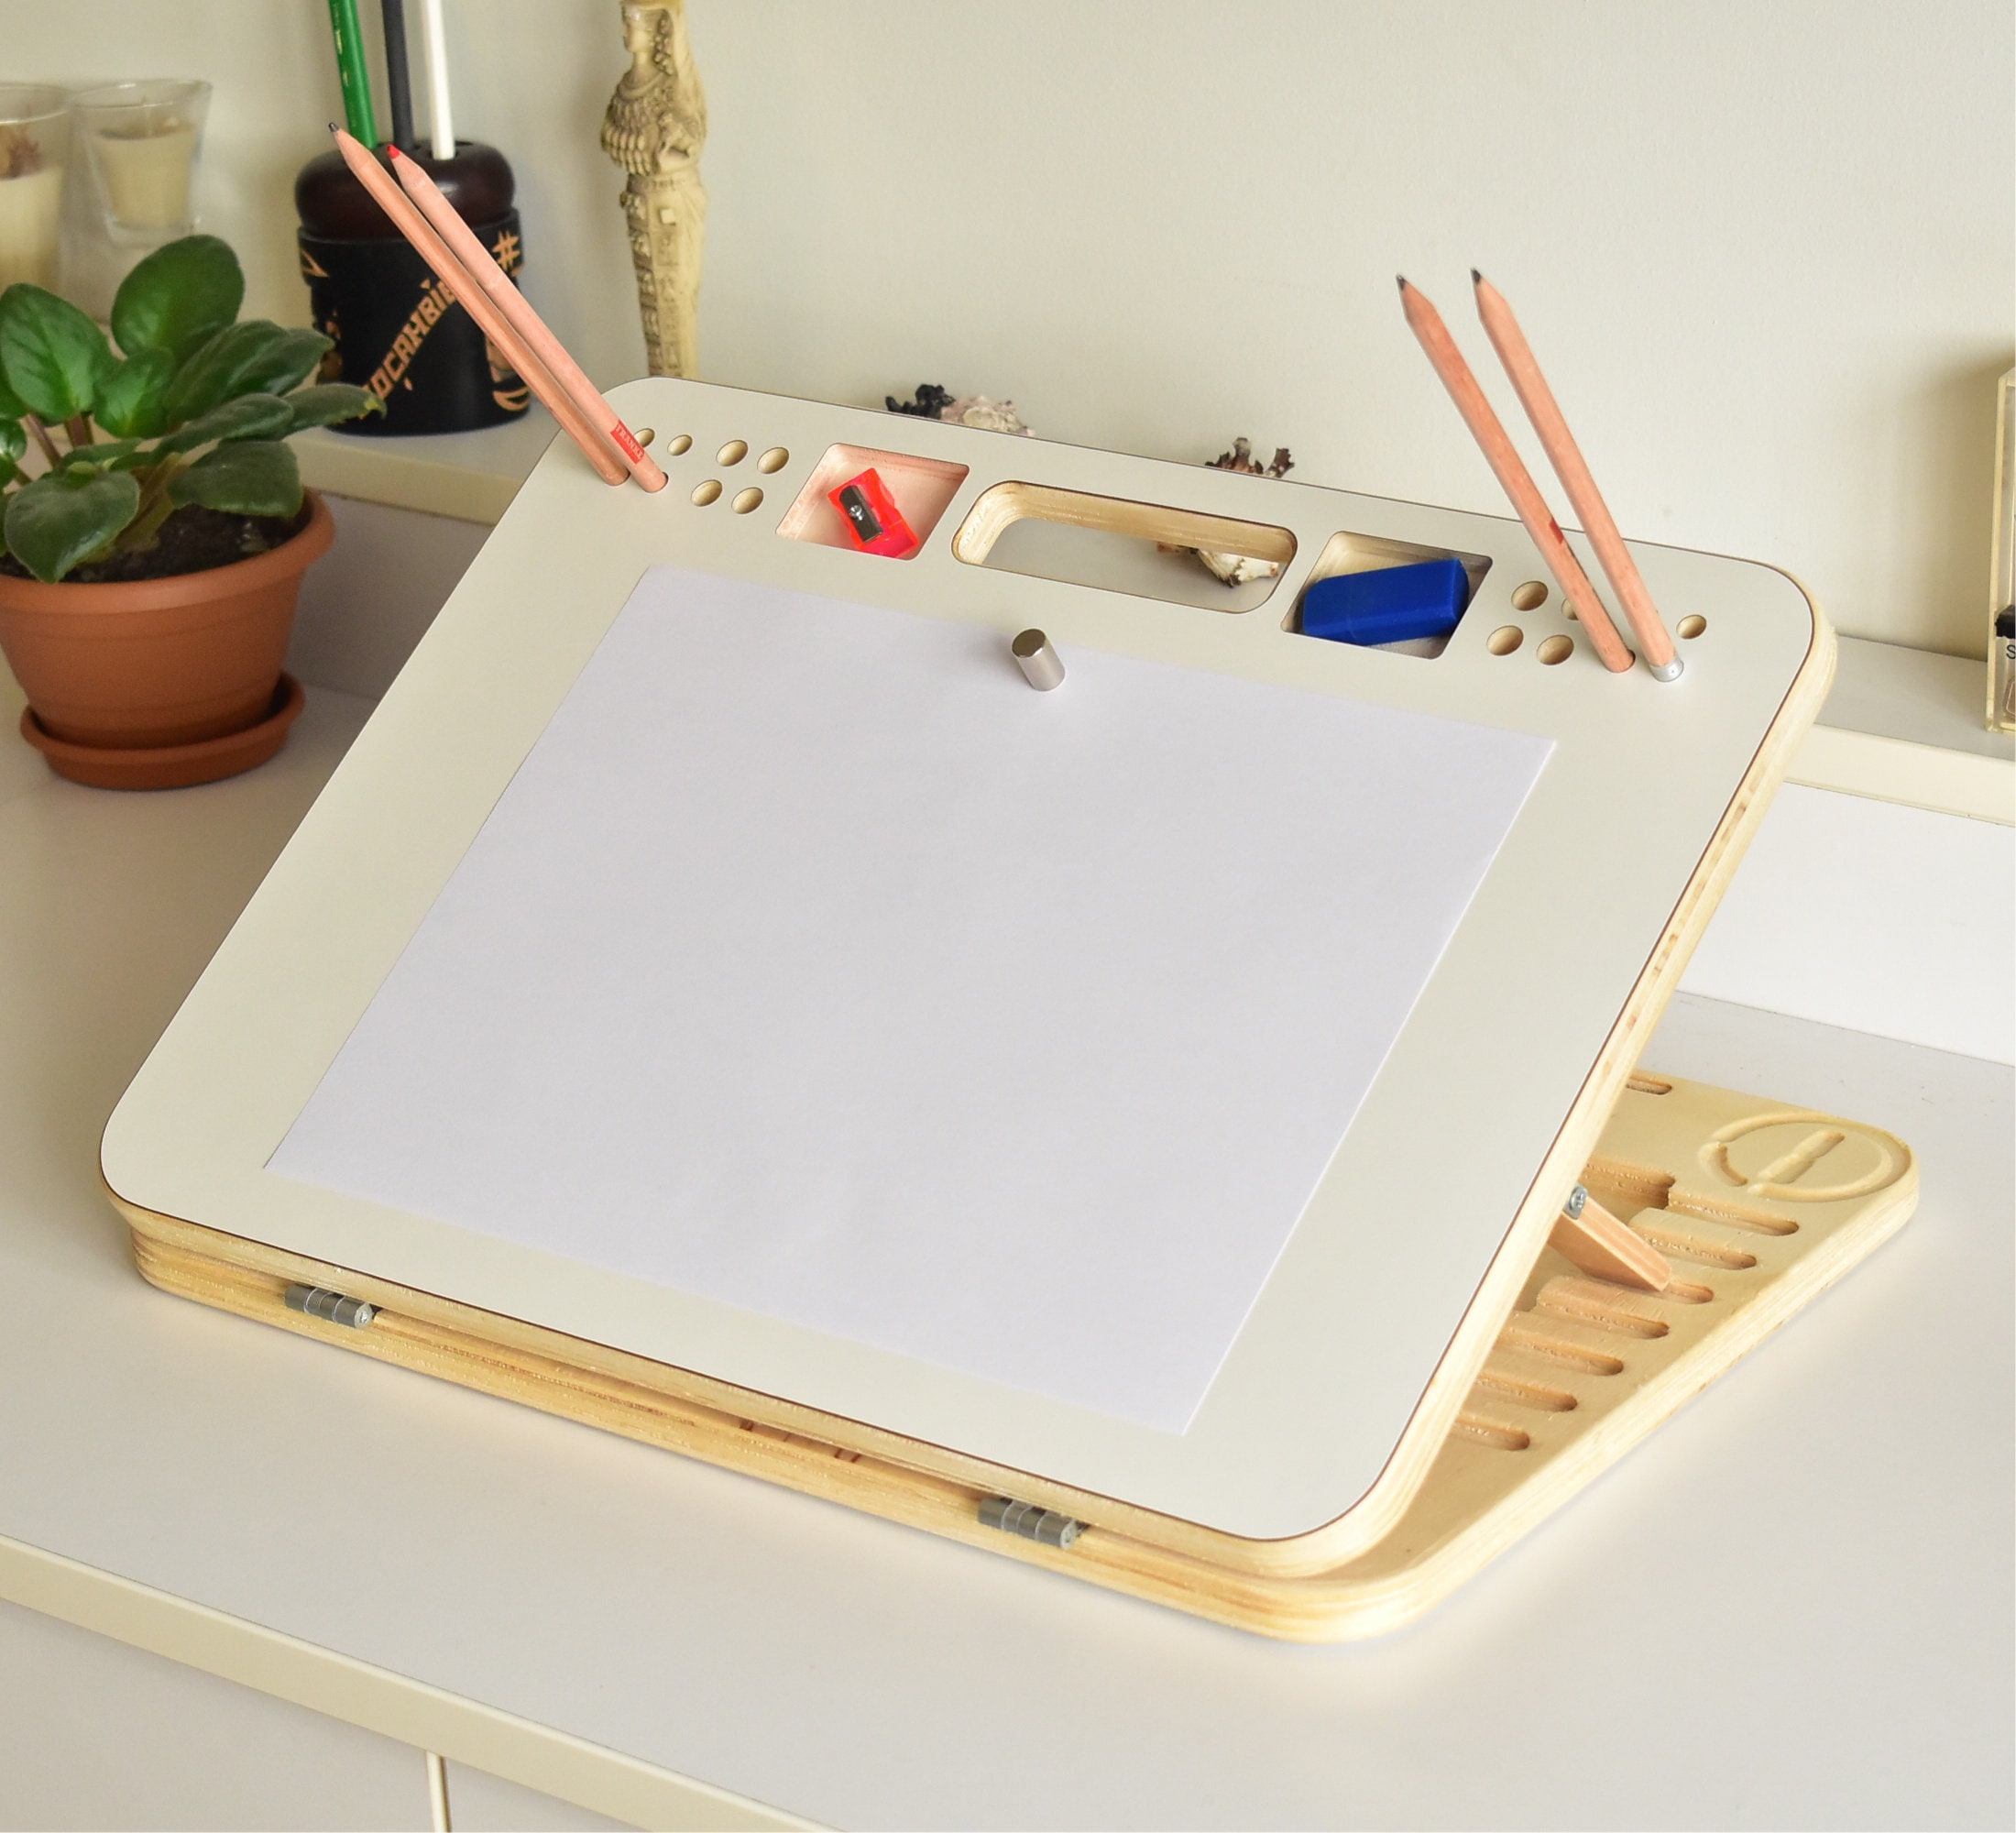 homemade portable drawing board desk - Pesquisa Google, Wood